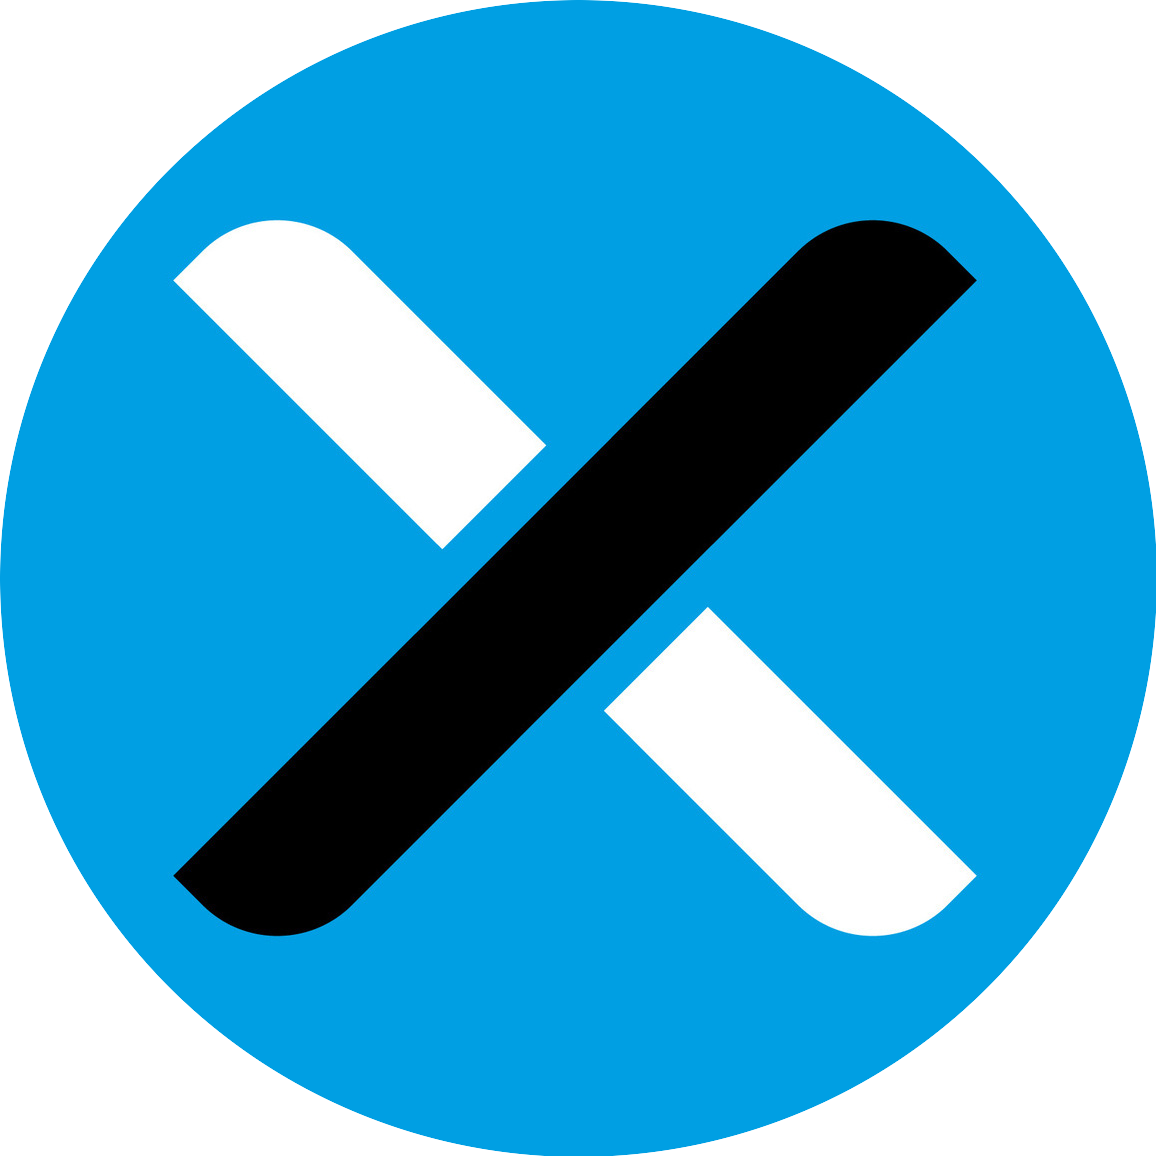 Emporix App logo